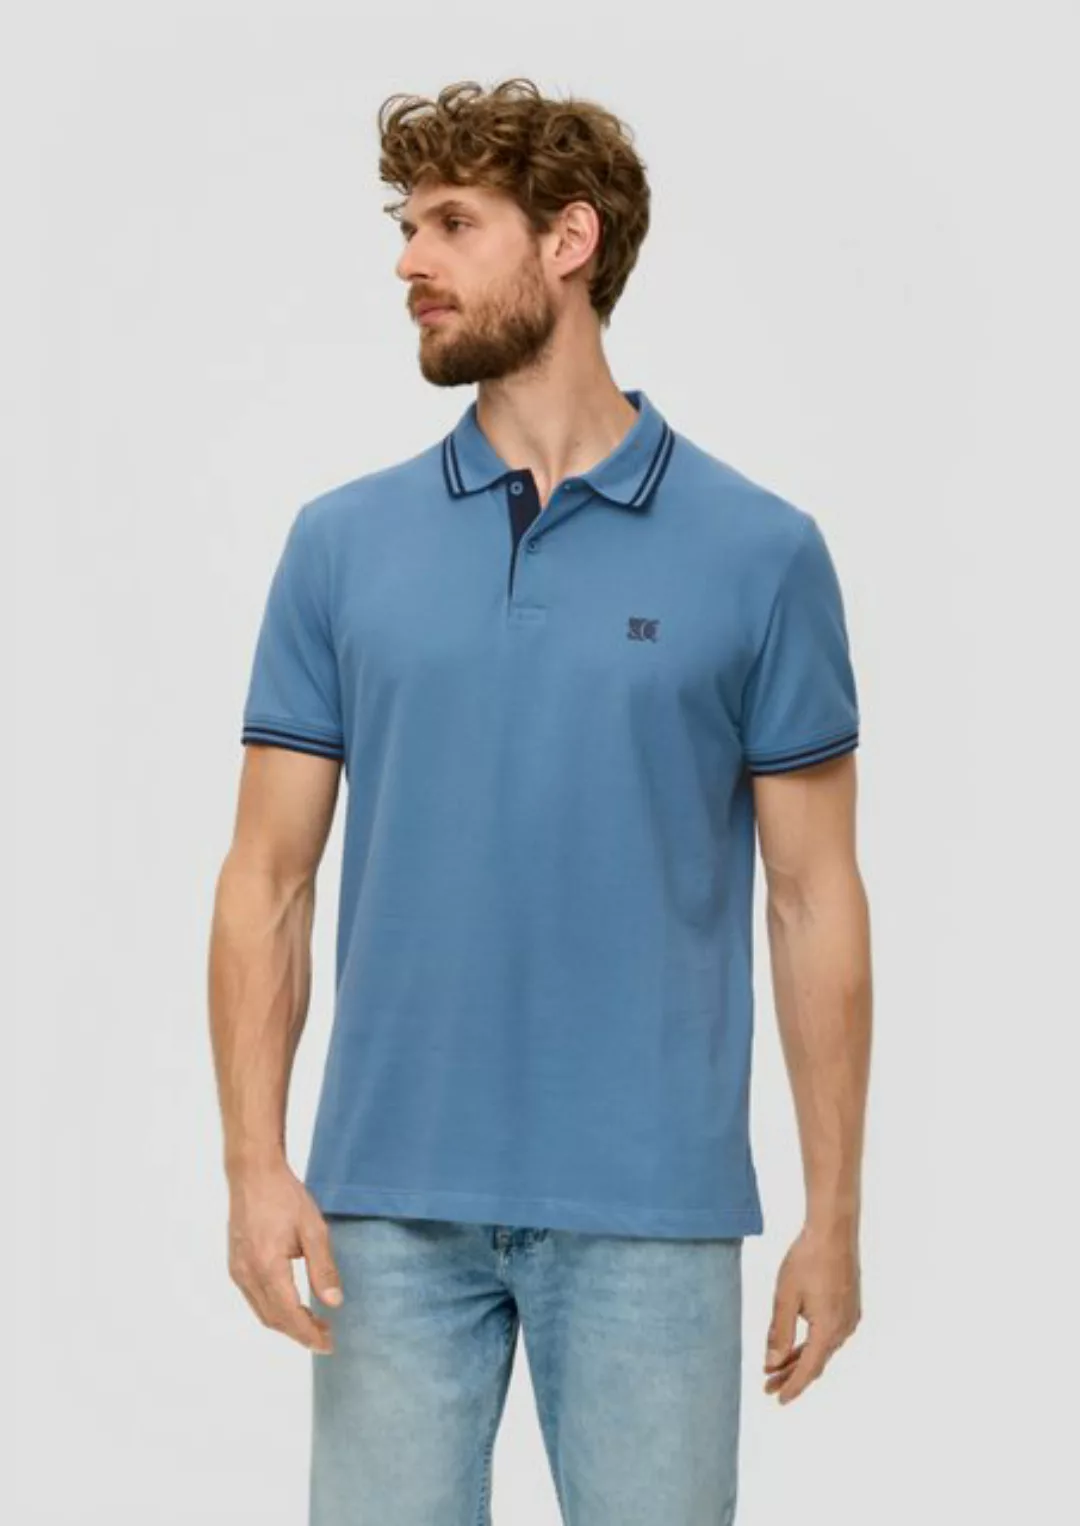 s.Oliver Kurzarmshirt Poloshirt mit Kontrast-Details Kontrast-Details, Logo günstig online kaufen